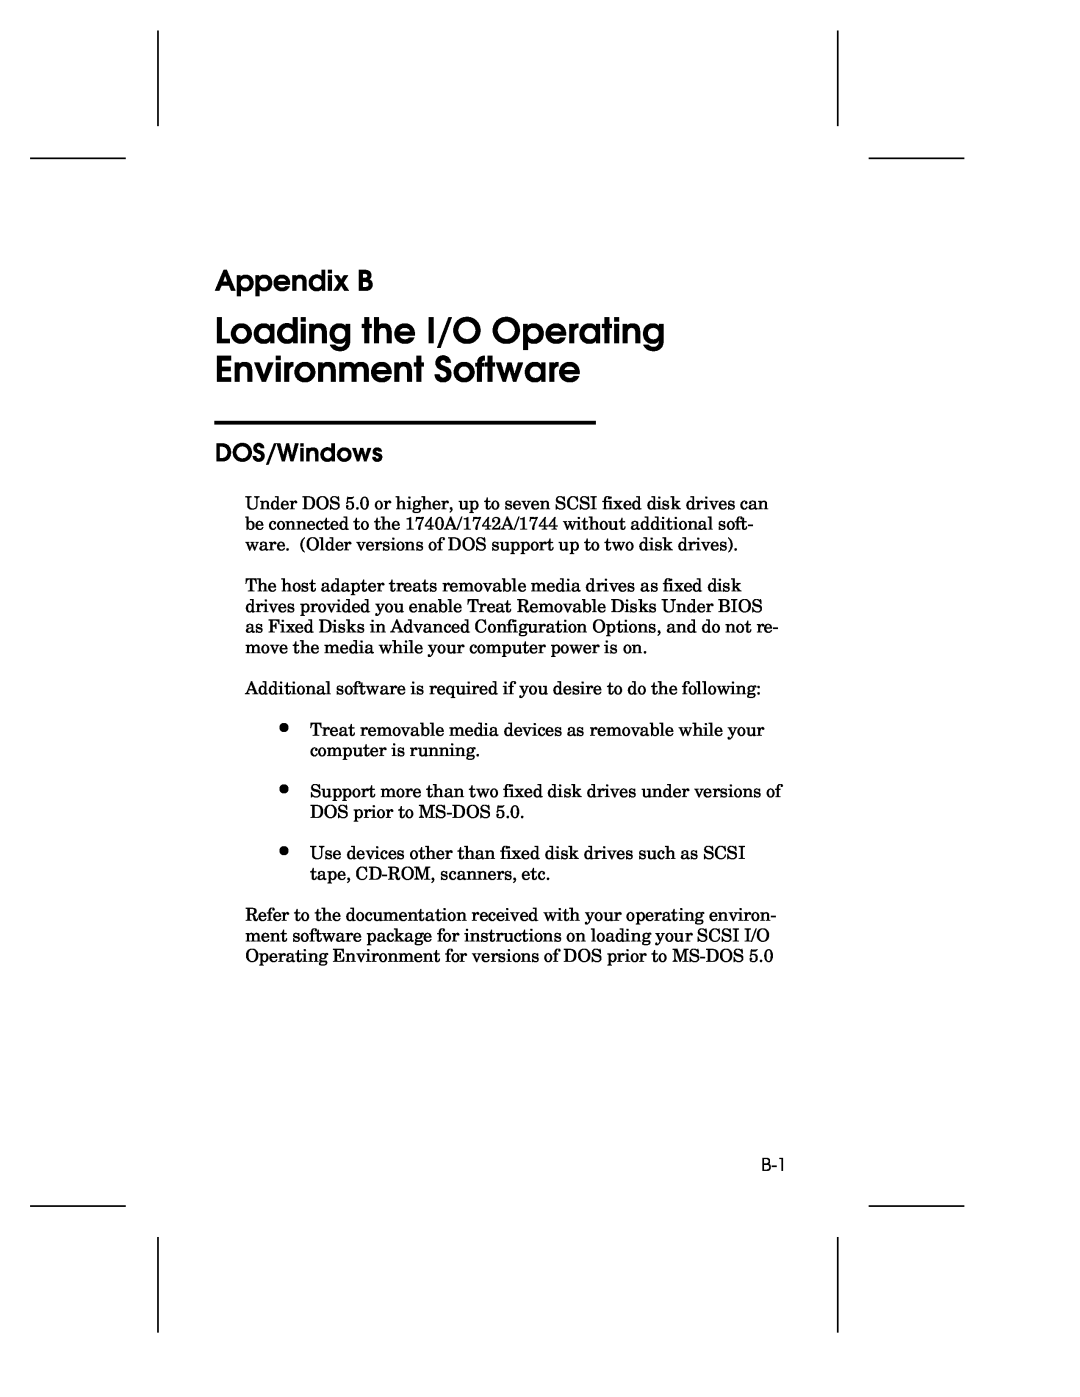 Adaptec 1742A, AHA-1740A, 1744 user manual Loading the I/O Operating Environment Software, Appendix B, DOS/Windows 